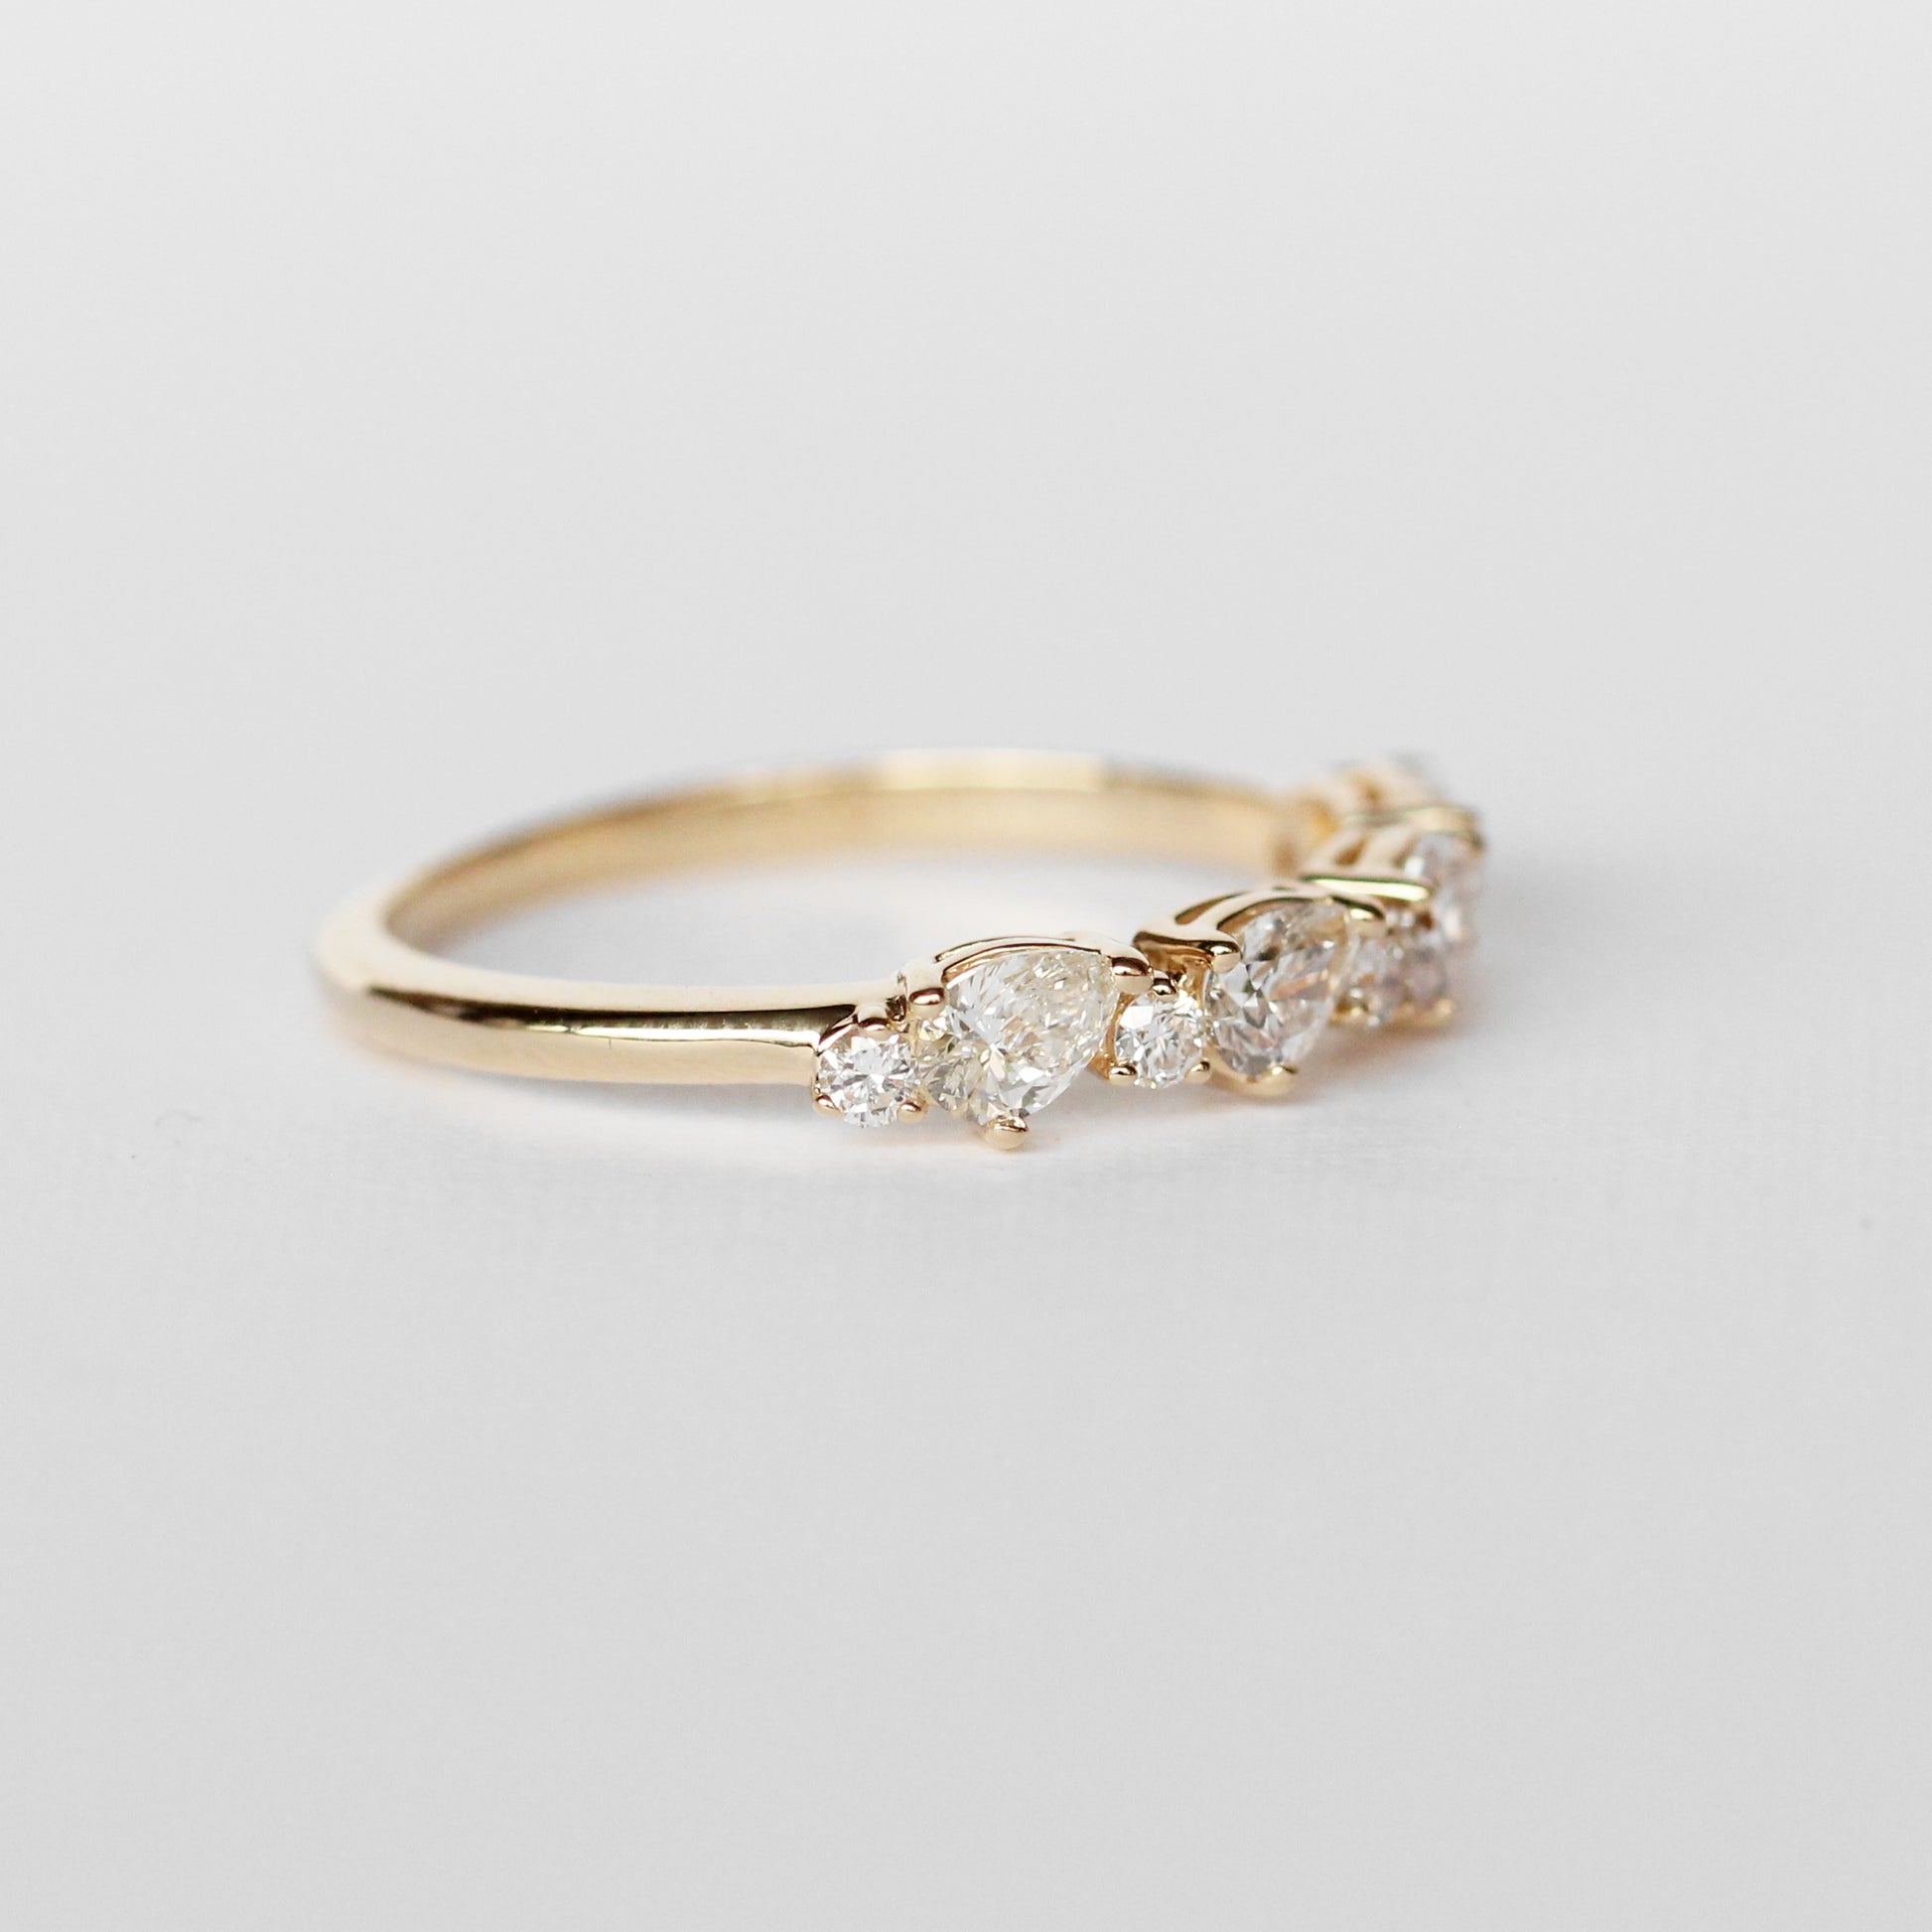 Reya Diamond Engagement Ring Band - White diamonds - Midwinter Co. Alternative Bridal Rings and Modern Fine Jewelry